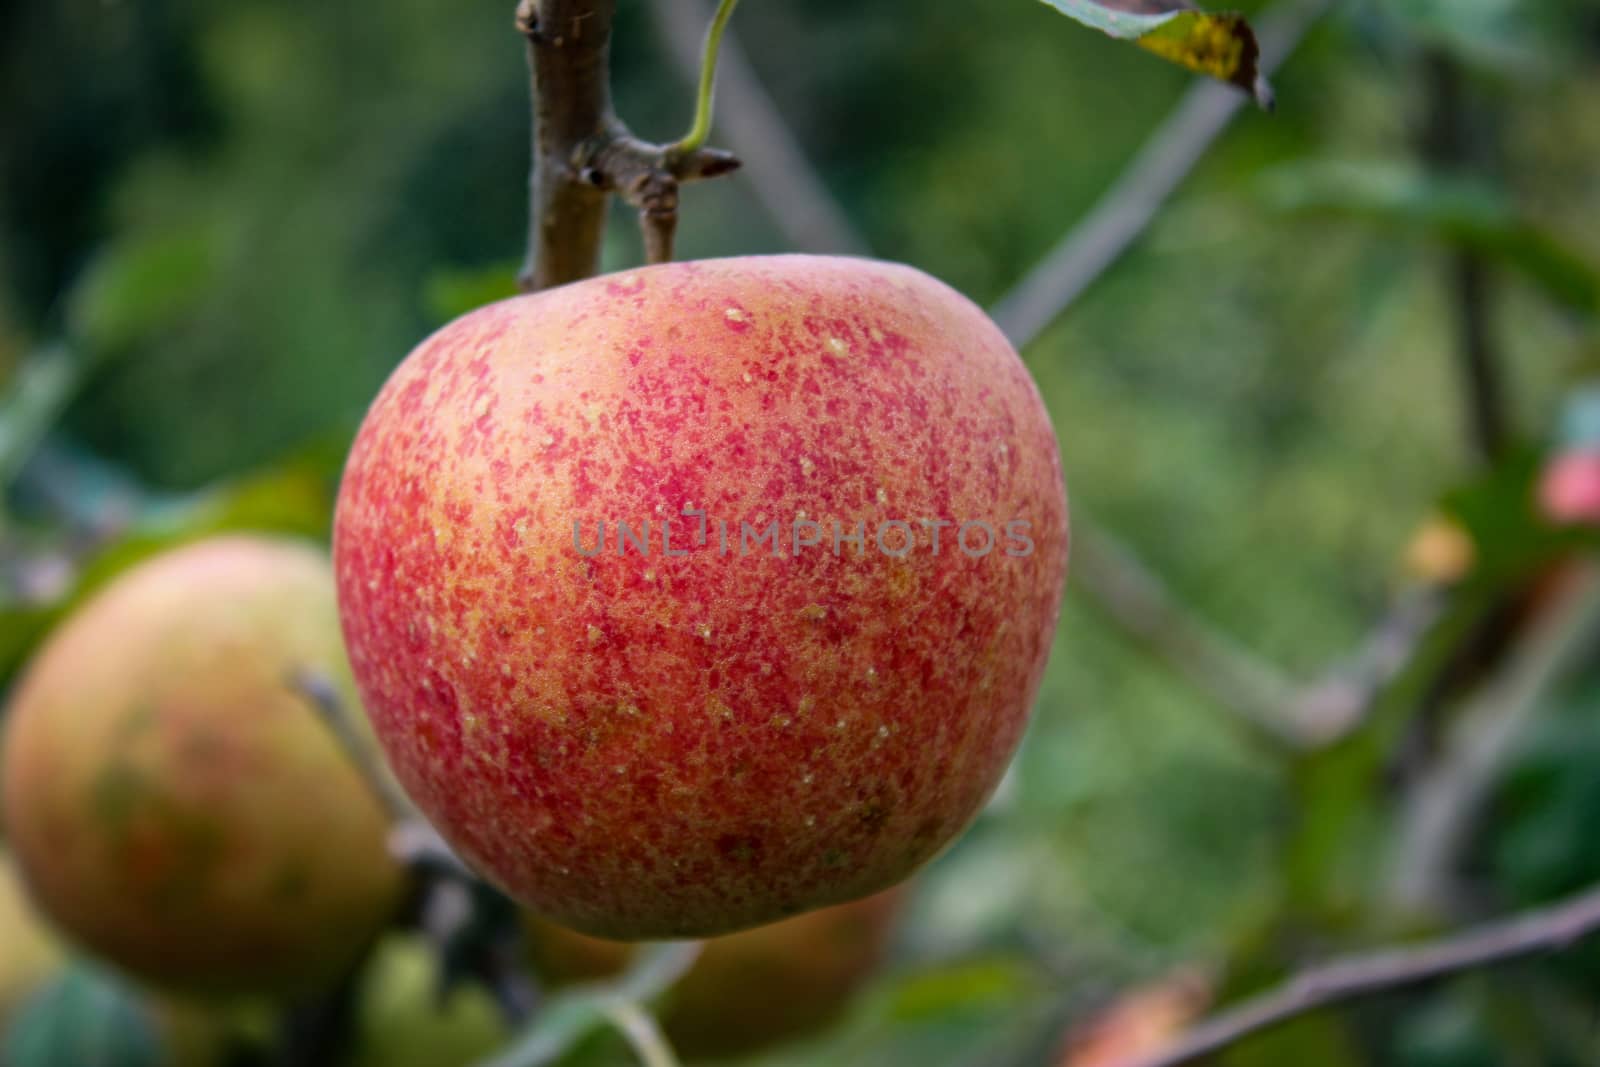 A beautiful slightly reddish apple on a branch in an orchard. Jonagold. Zavidovici, Bosnia and Herzegovina.